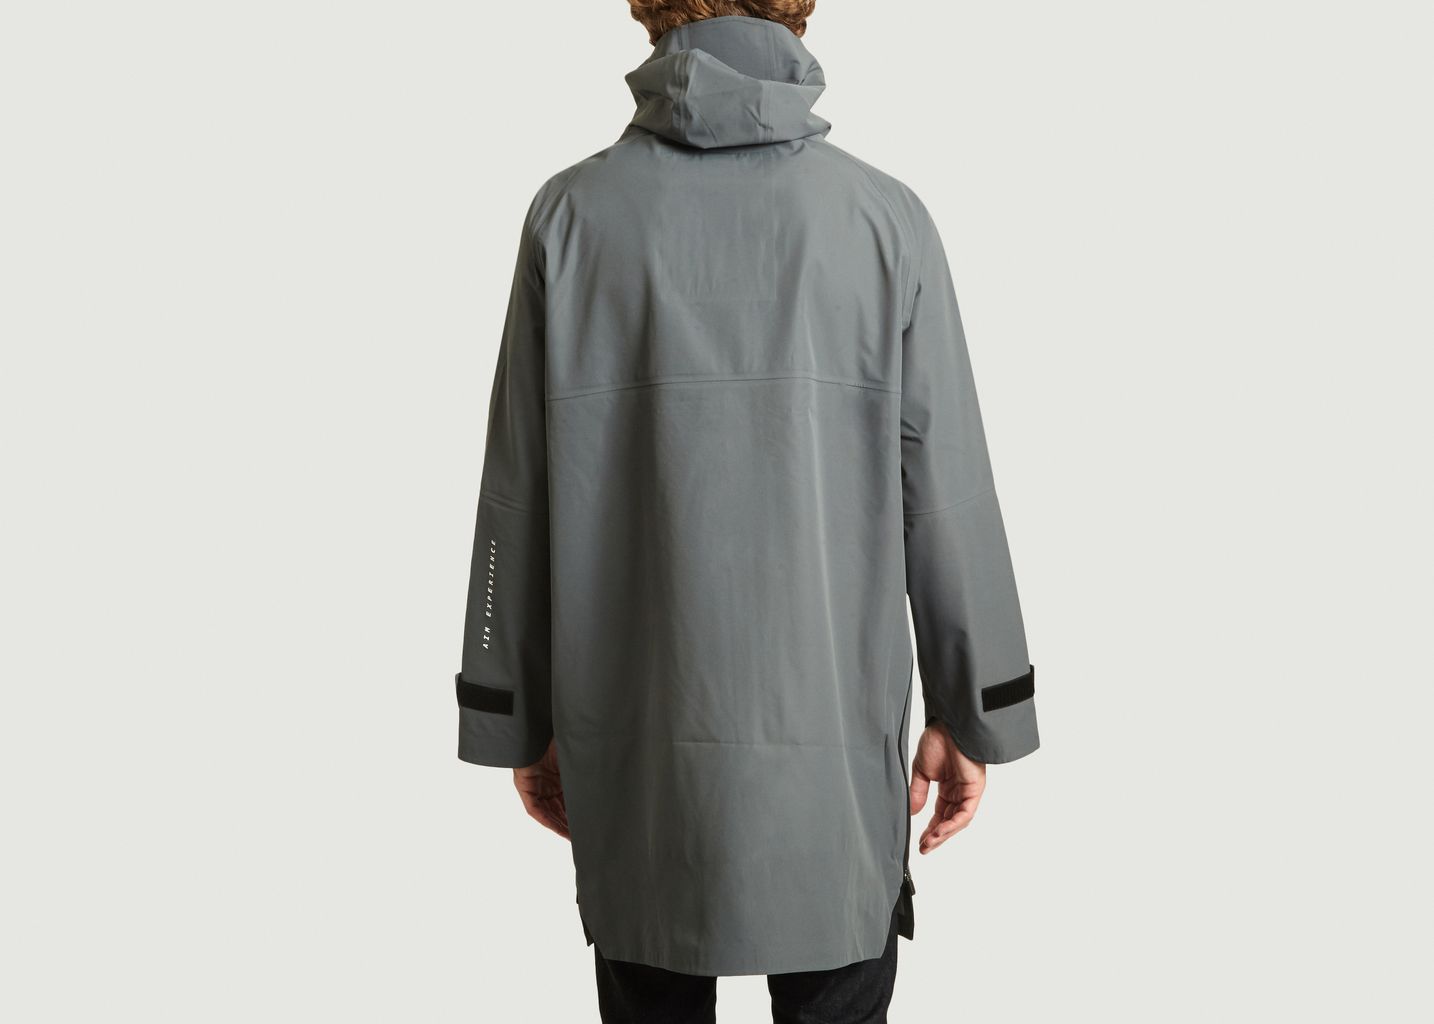 AIM rain jacket - AIM Experience